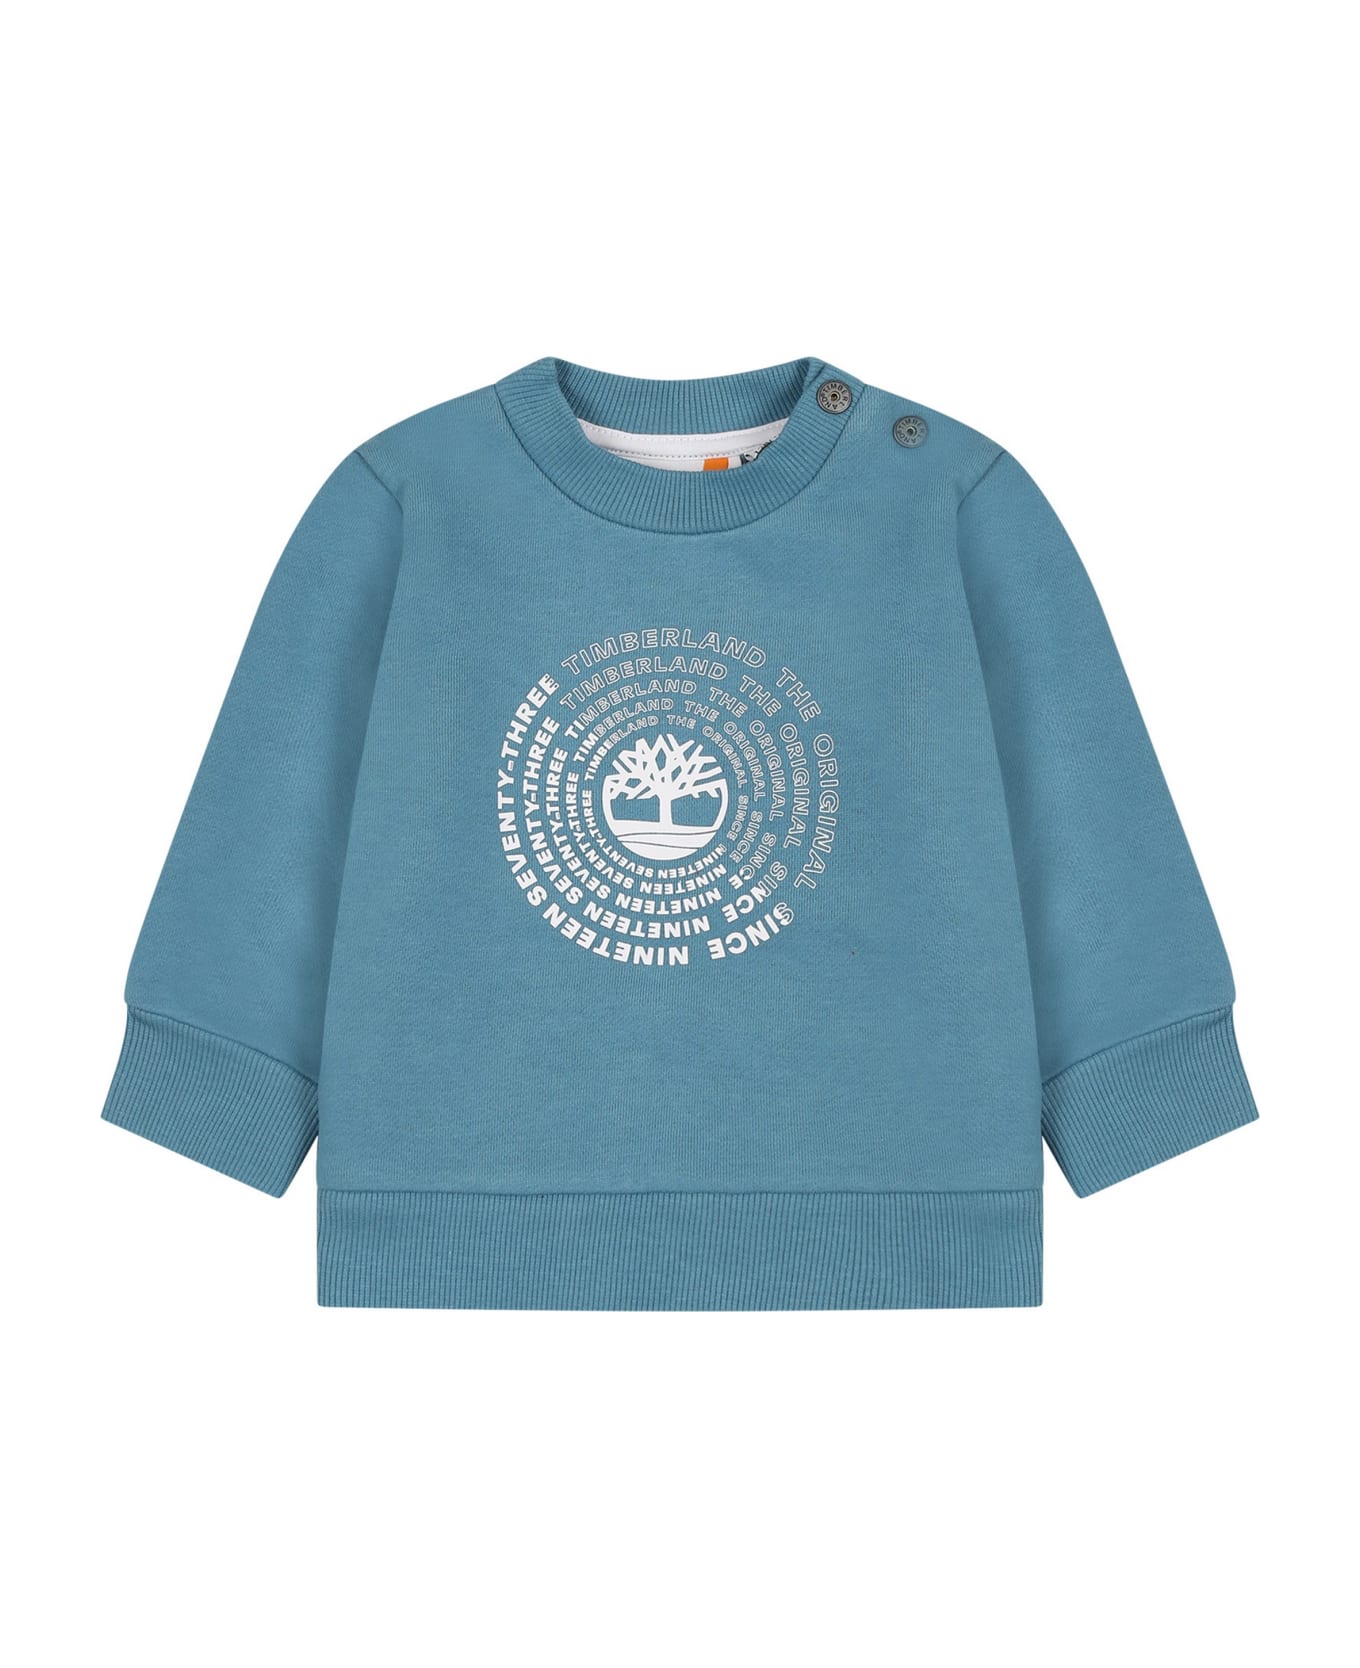 Timberland Light-blue Sweatshirt For Baby Boy With Printed Logo - Light Blue